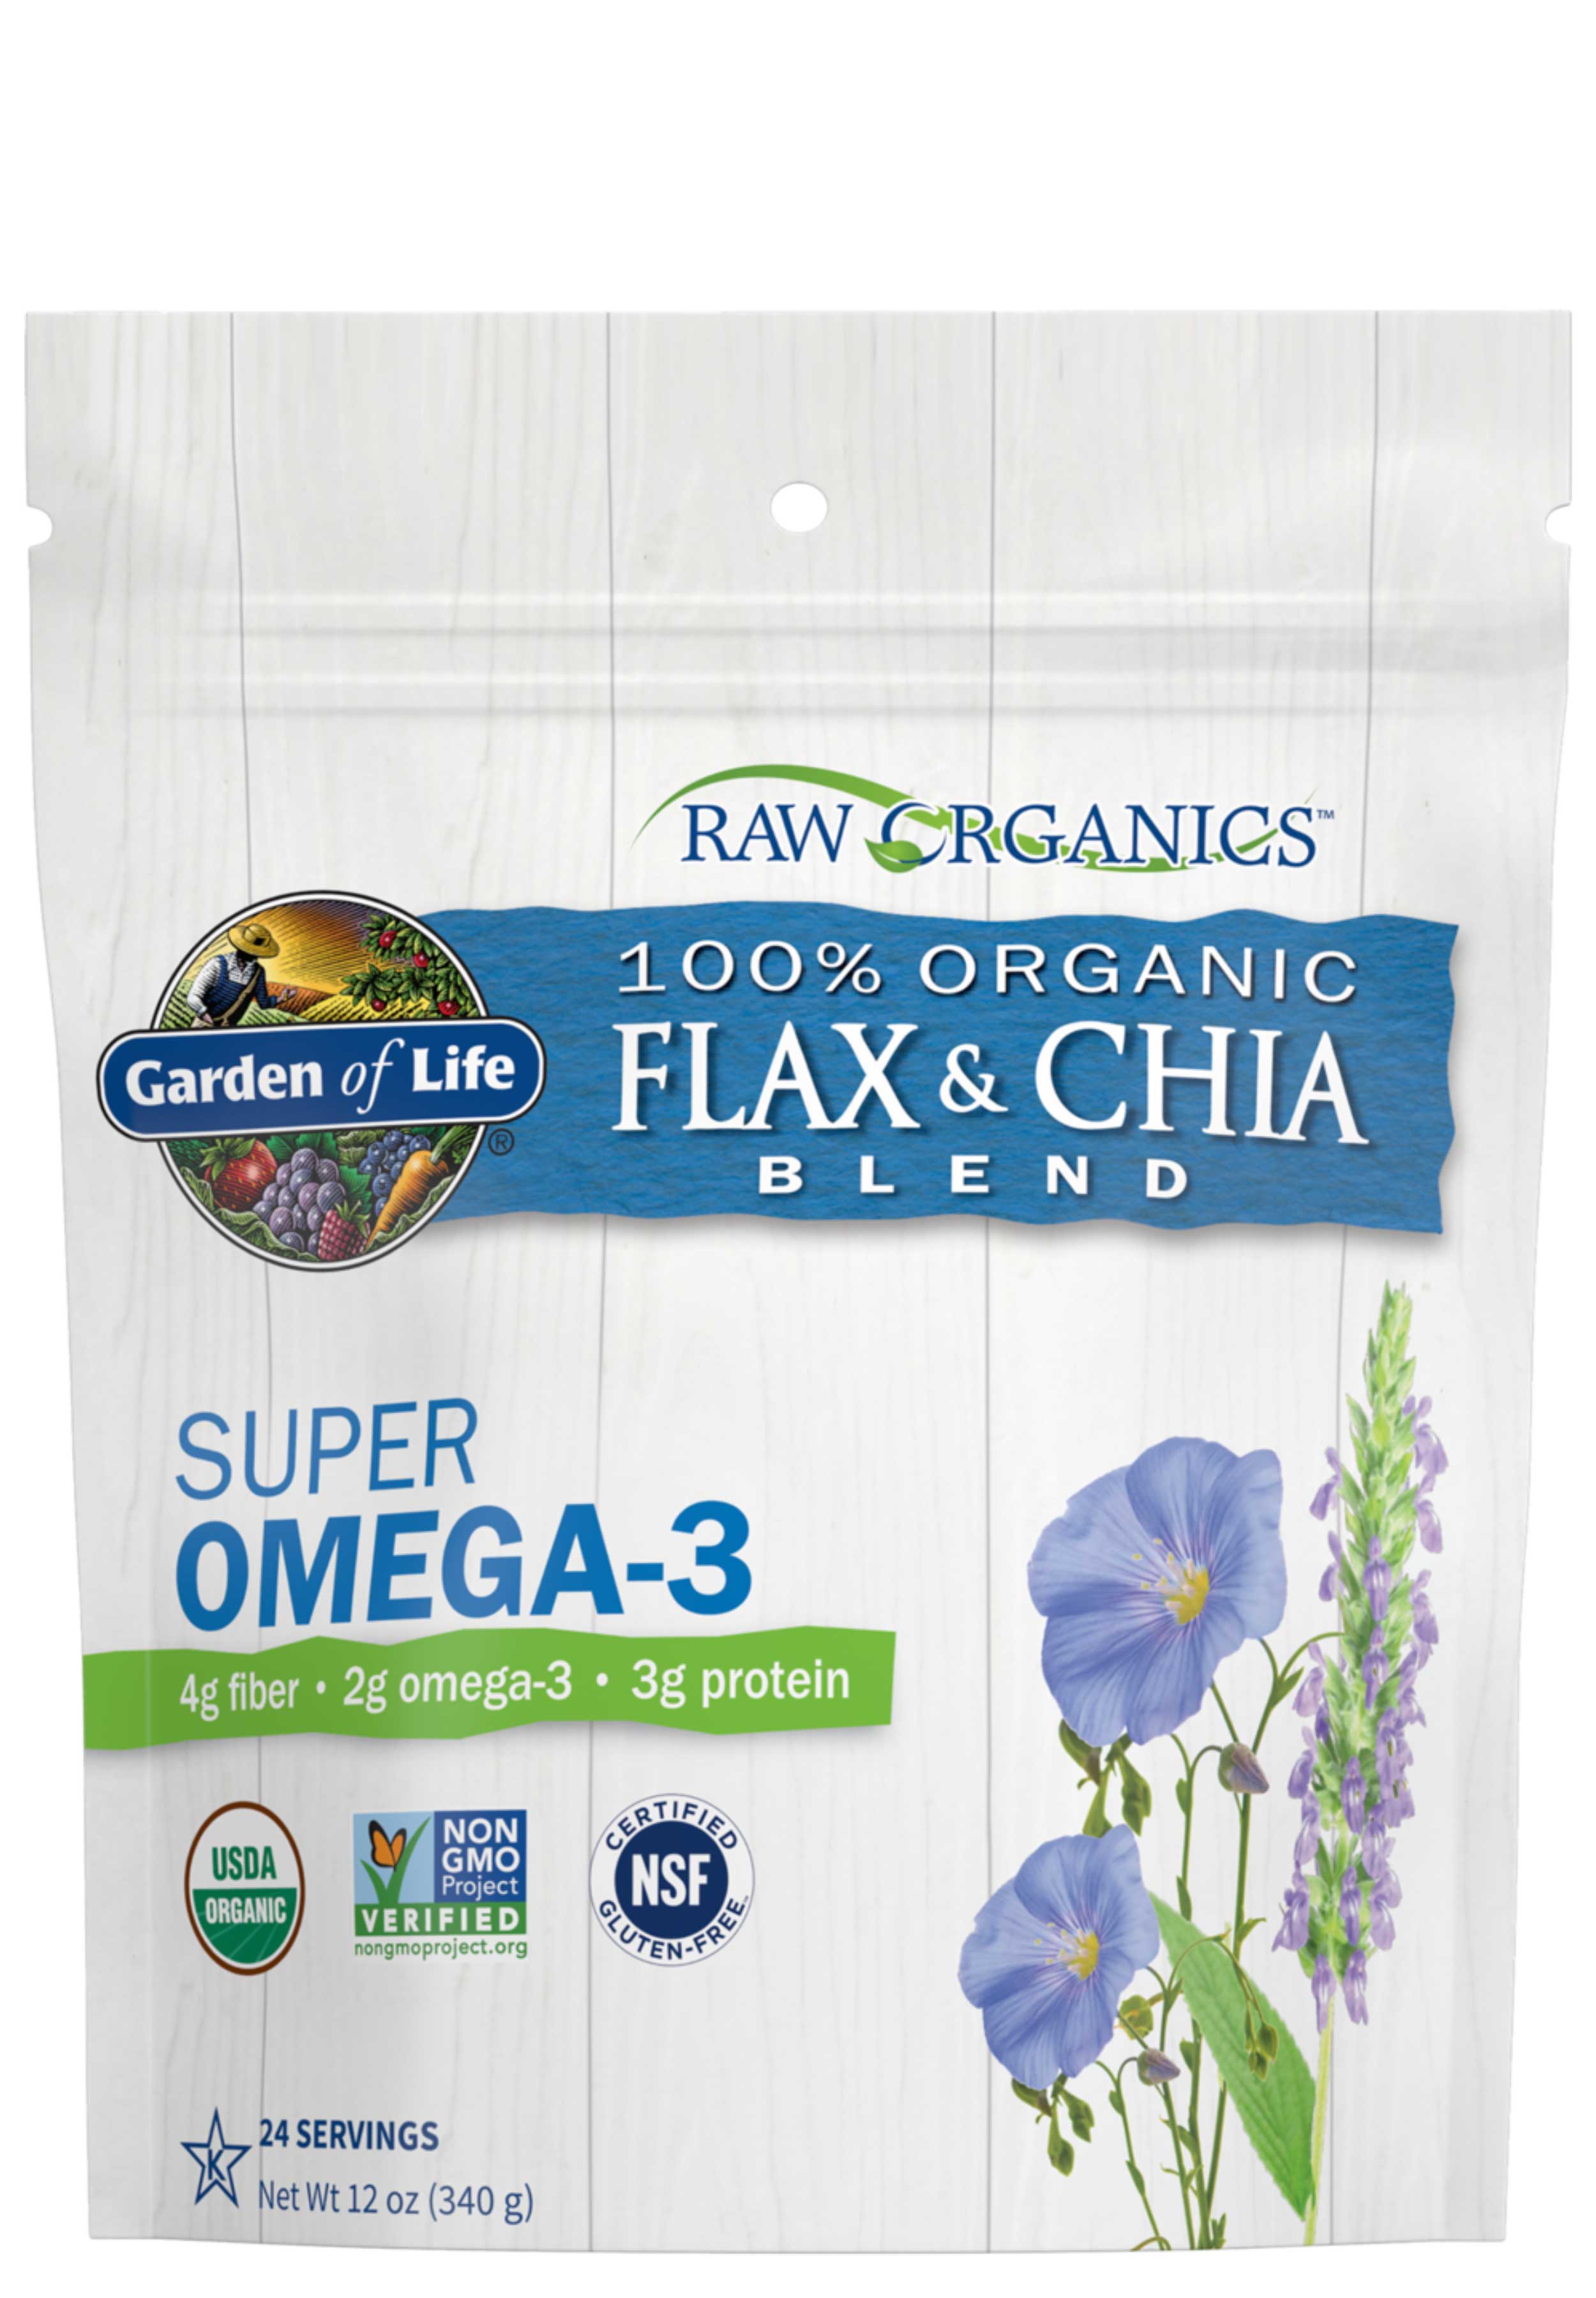 Garden of Life Raw Organics 100% Organic Flax and Chia Blend